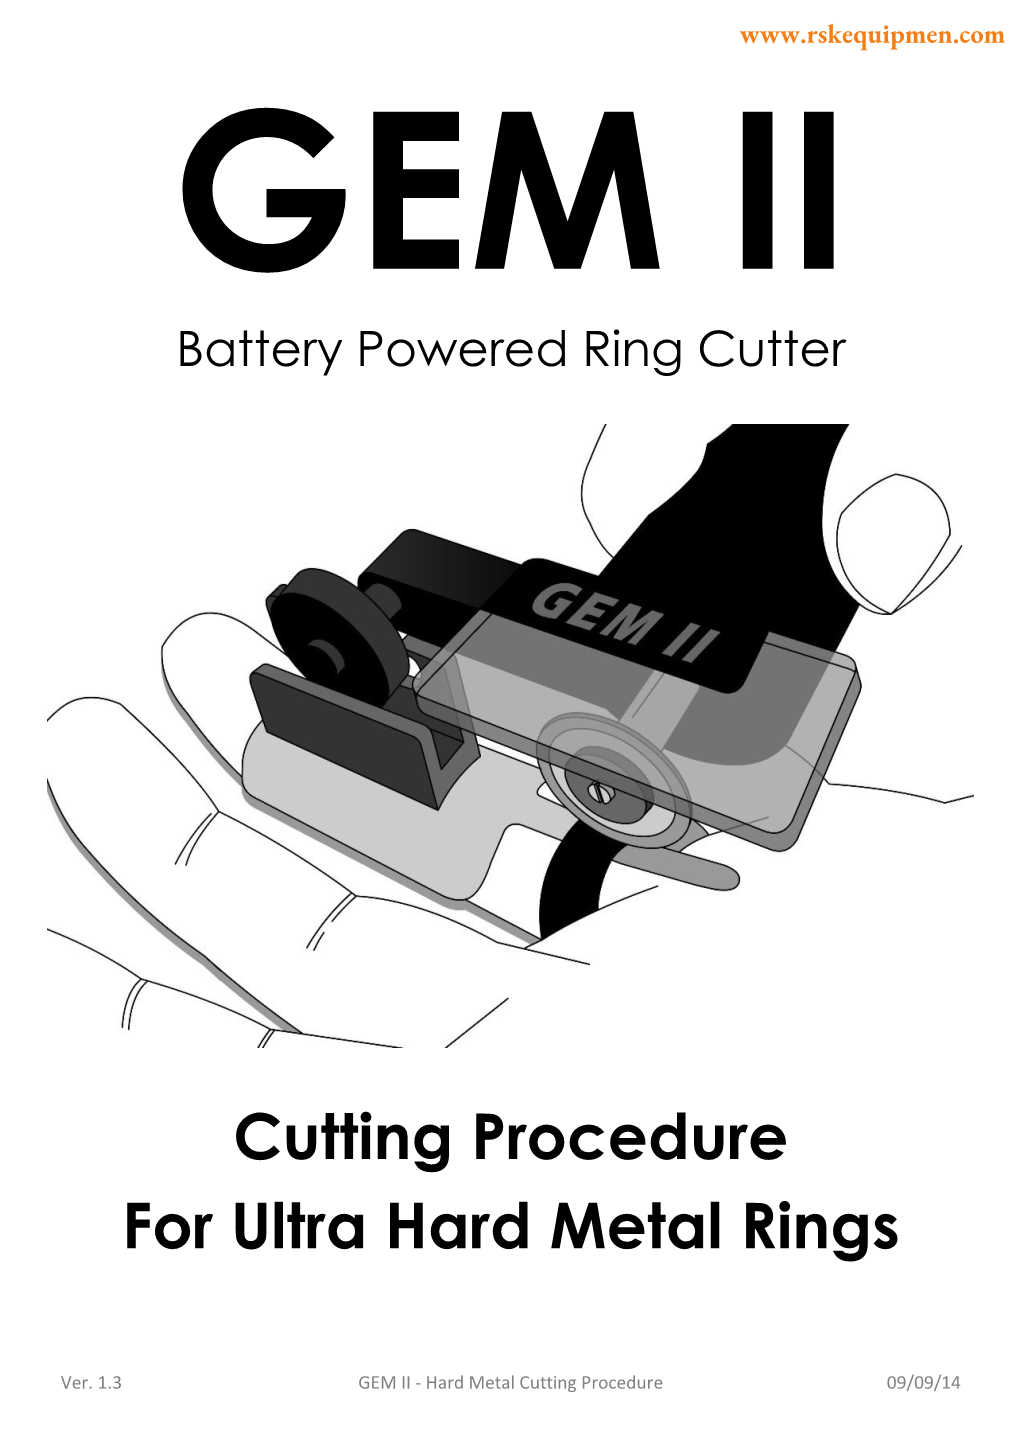 Cutting Procedure for Ultra Hard Metal Rings